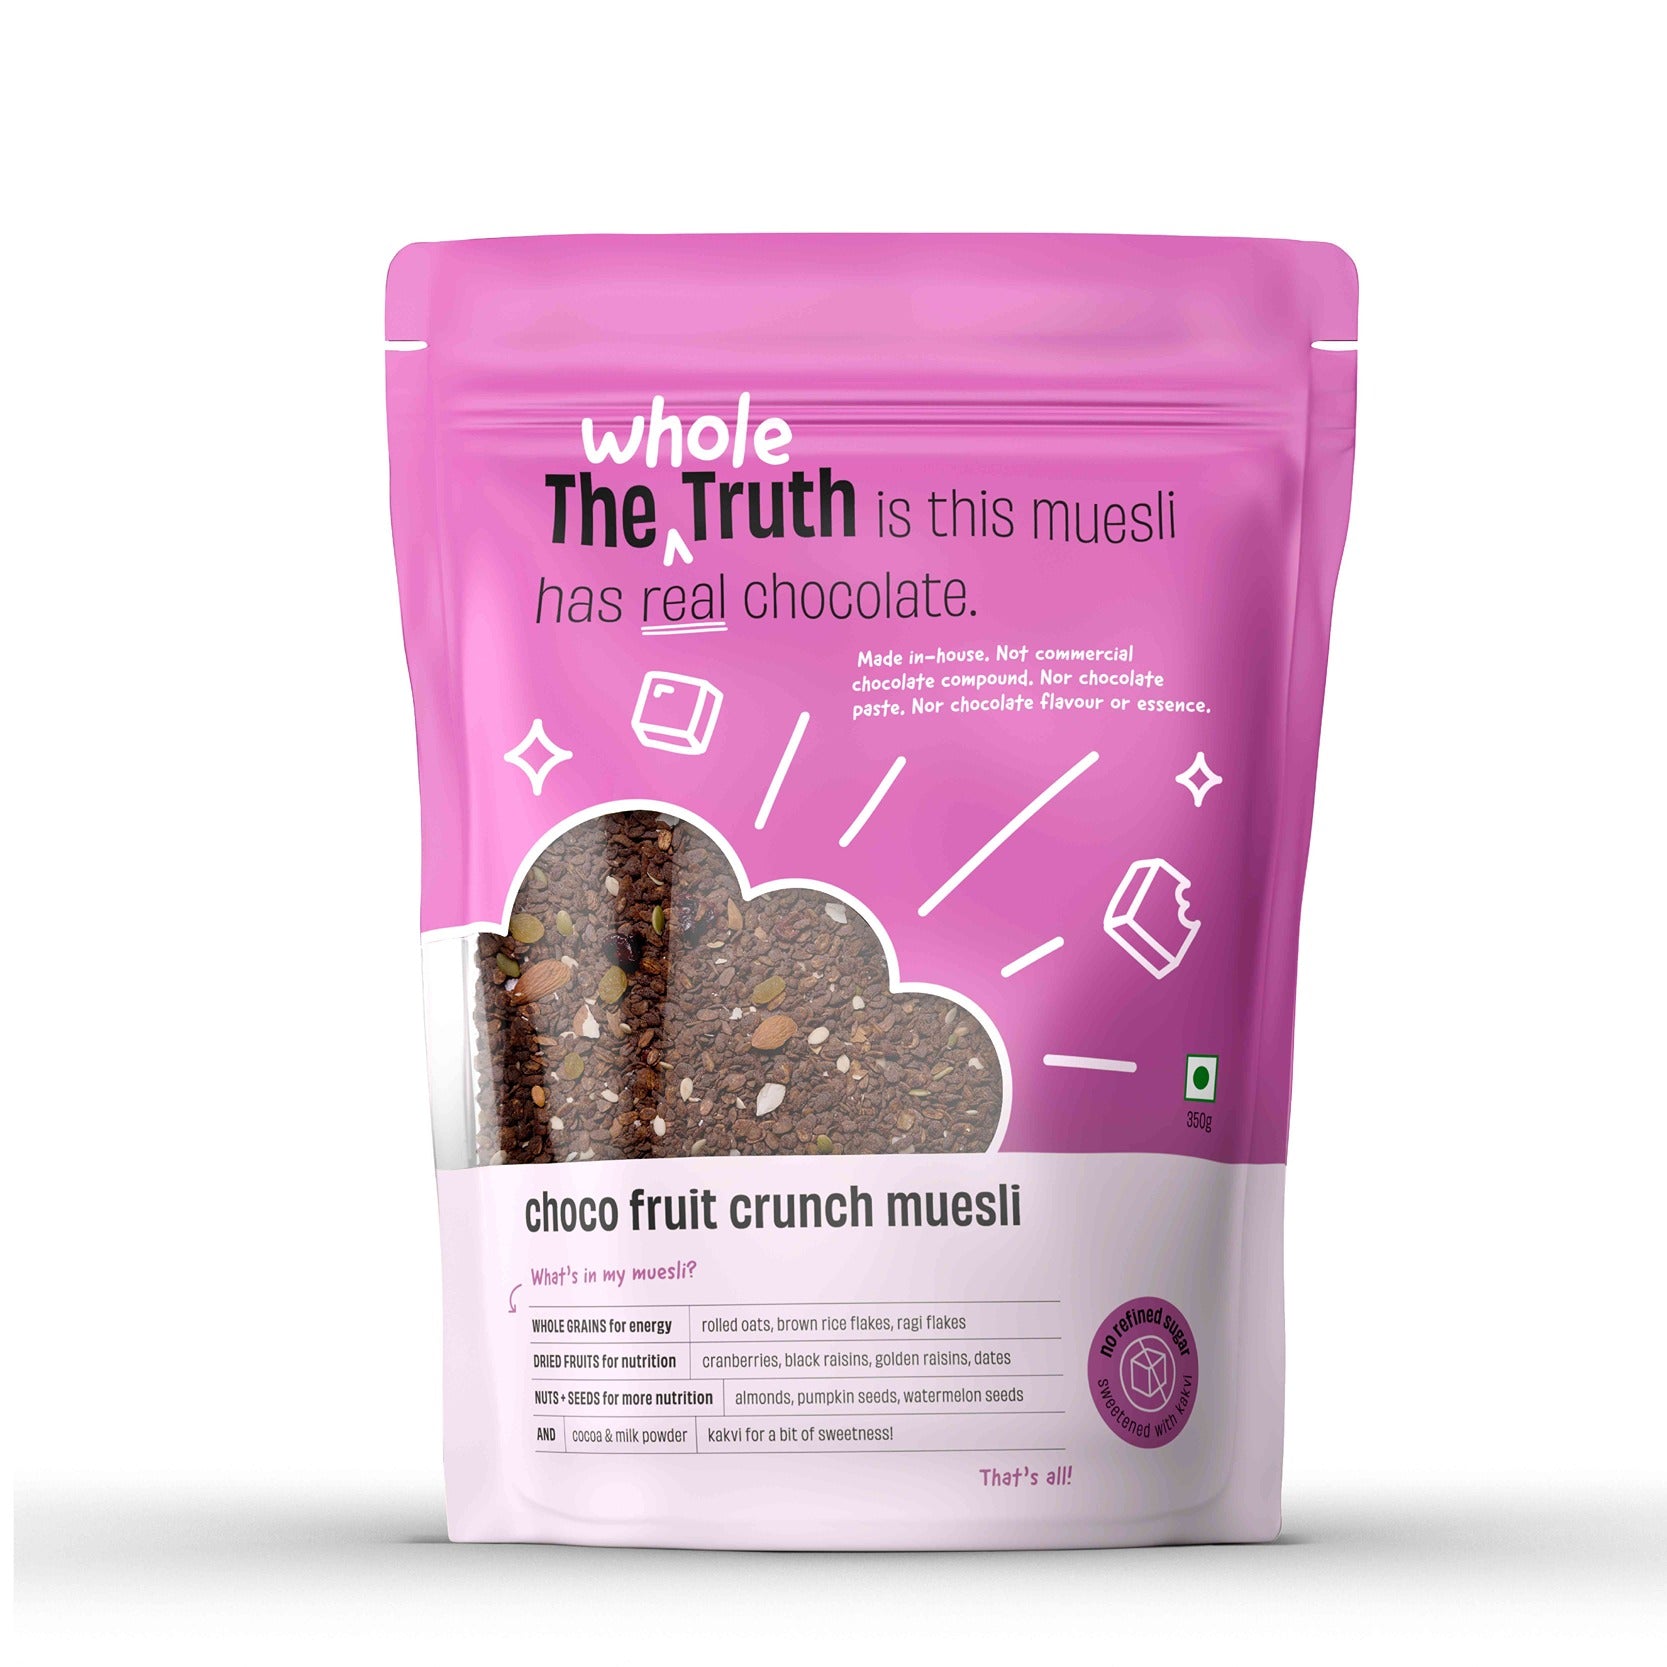 The Whole Truth Choco Fruit Crunch Muesli 350gms